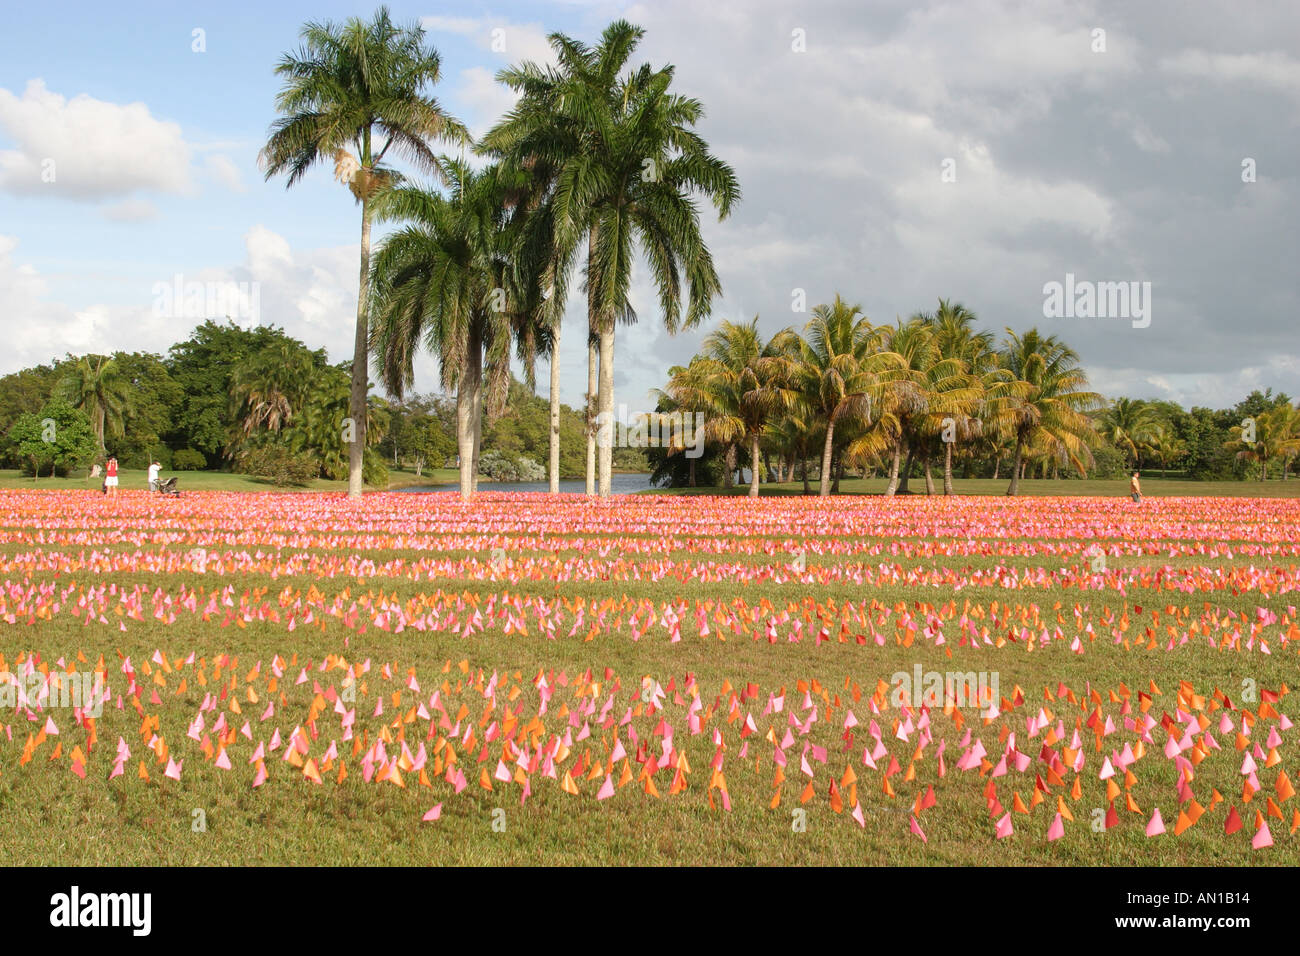 Miami Florida,Coral Gables,Fairchild Tropical Garden,Flower Square art artwork installation by Patricia Van Dalen of Venezuela,10,000 vinyl marker fla Stock Photo